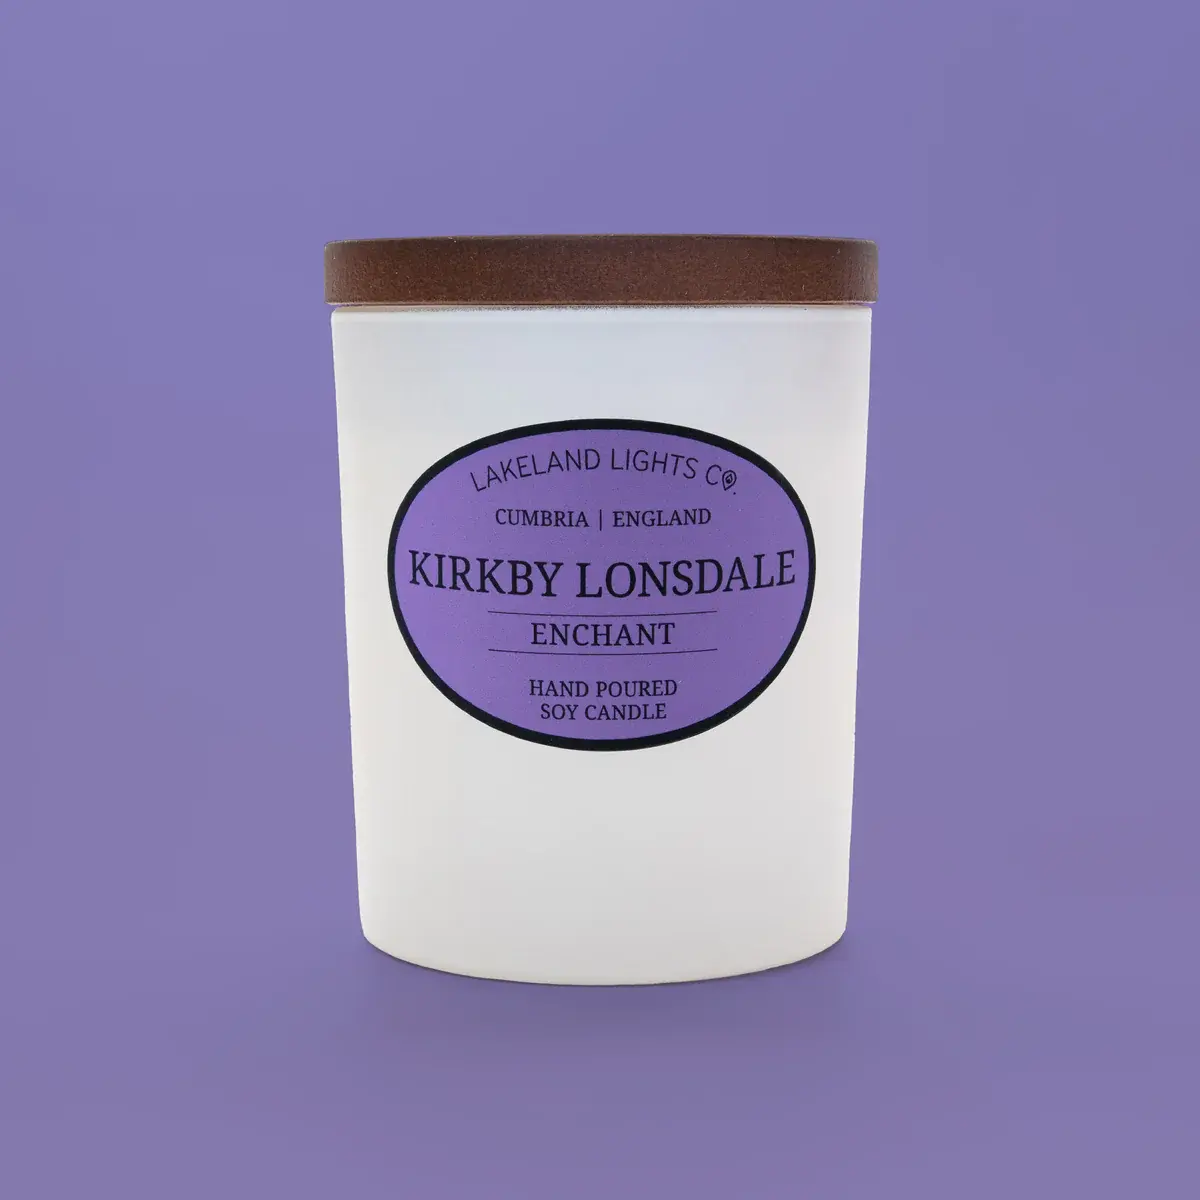 LakelandLights Kirkby Lonsdale Soy Candle